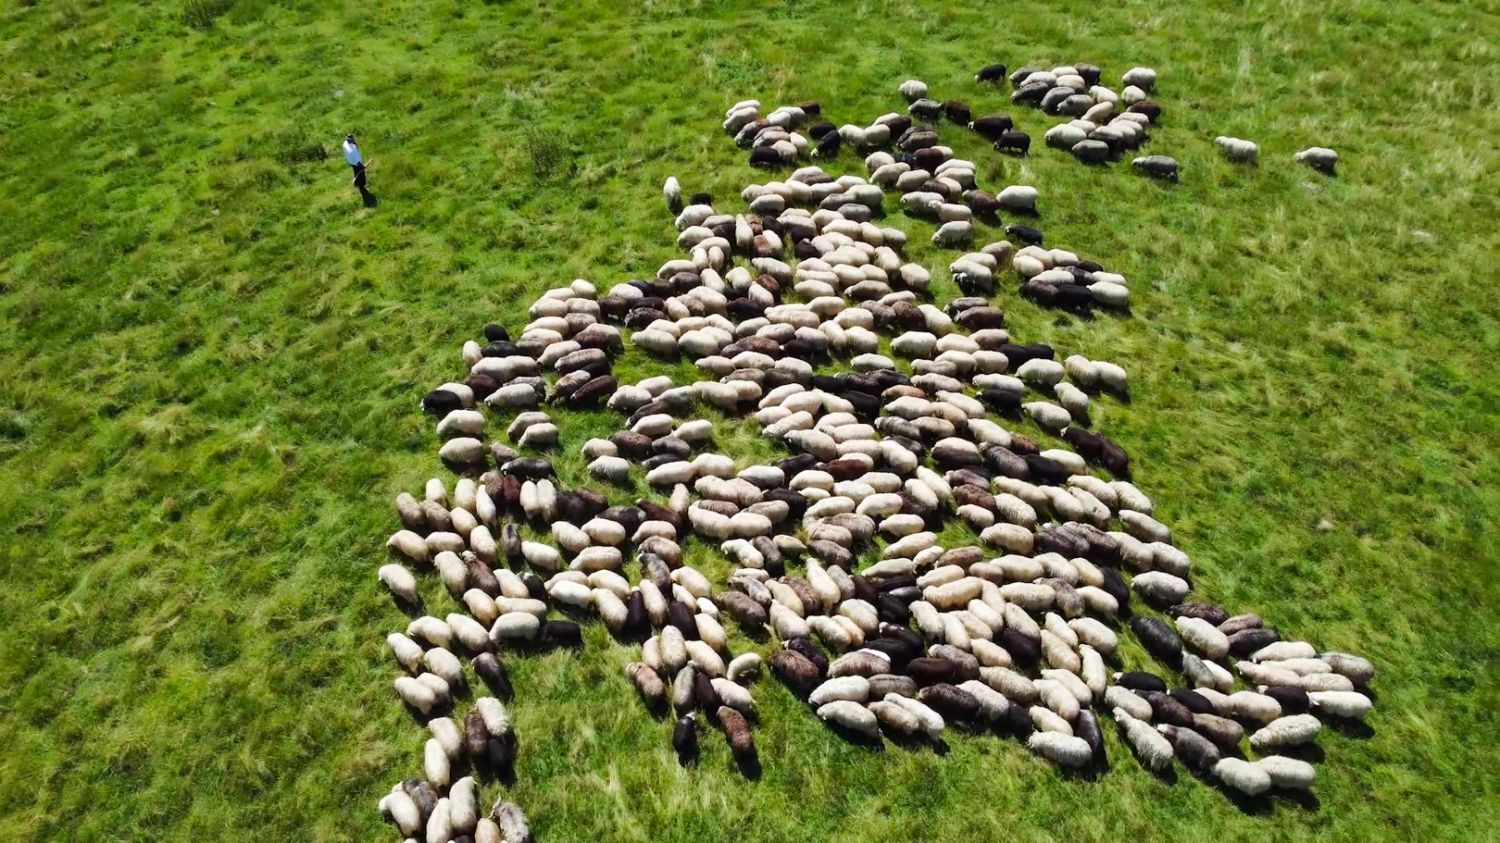 Widok pasterza ze stadem owiec